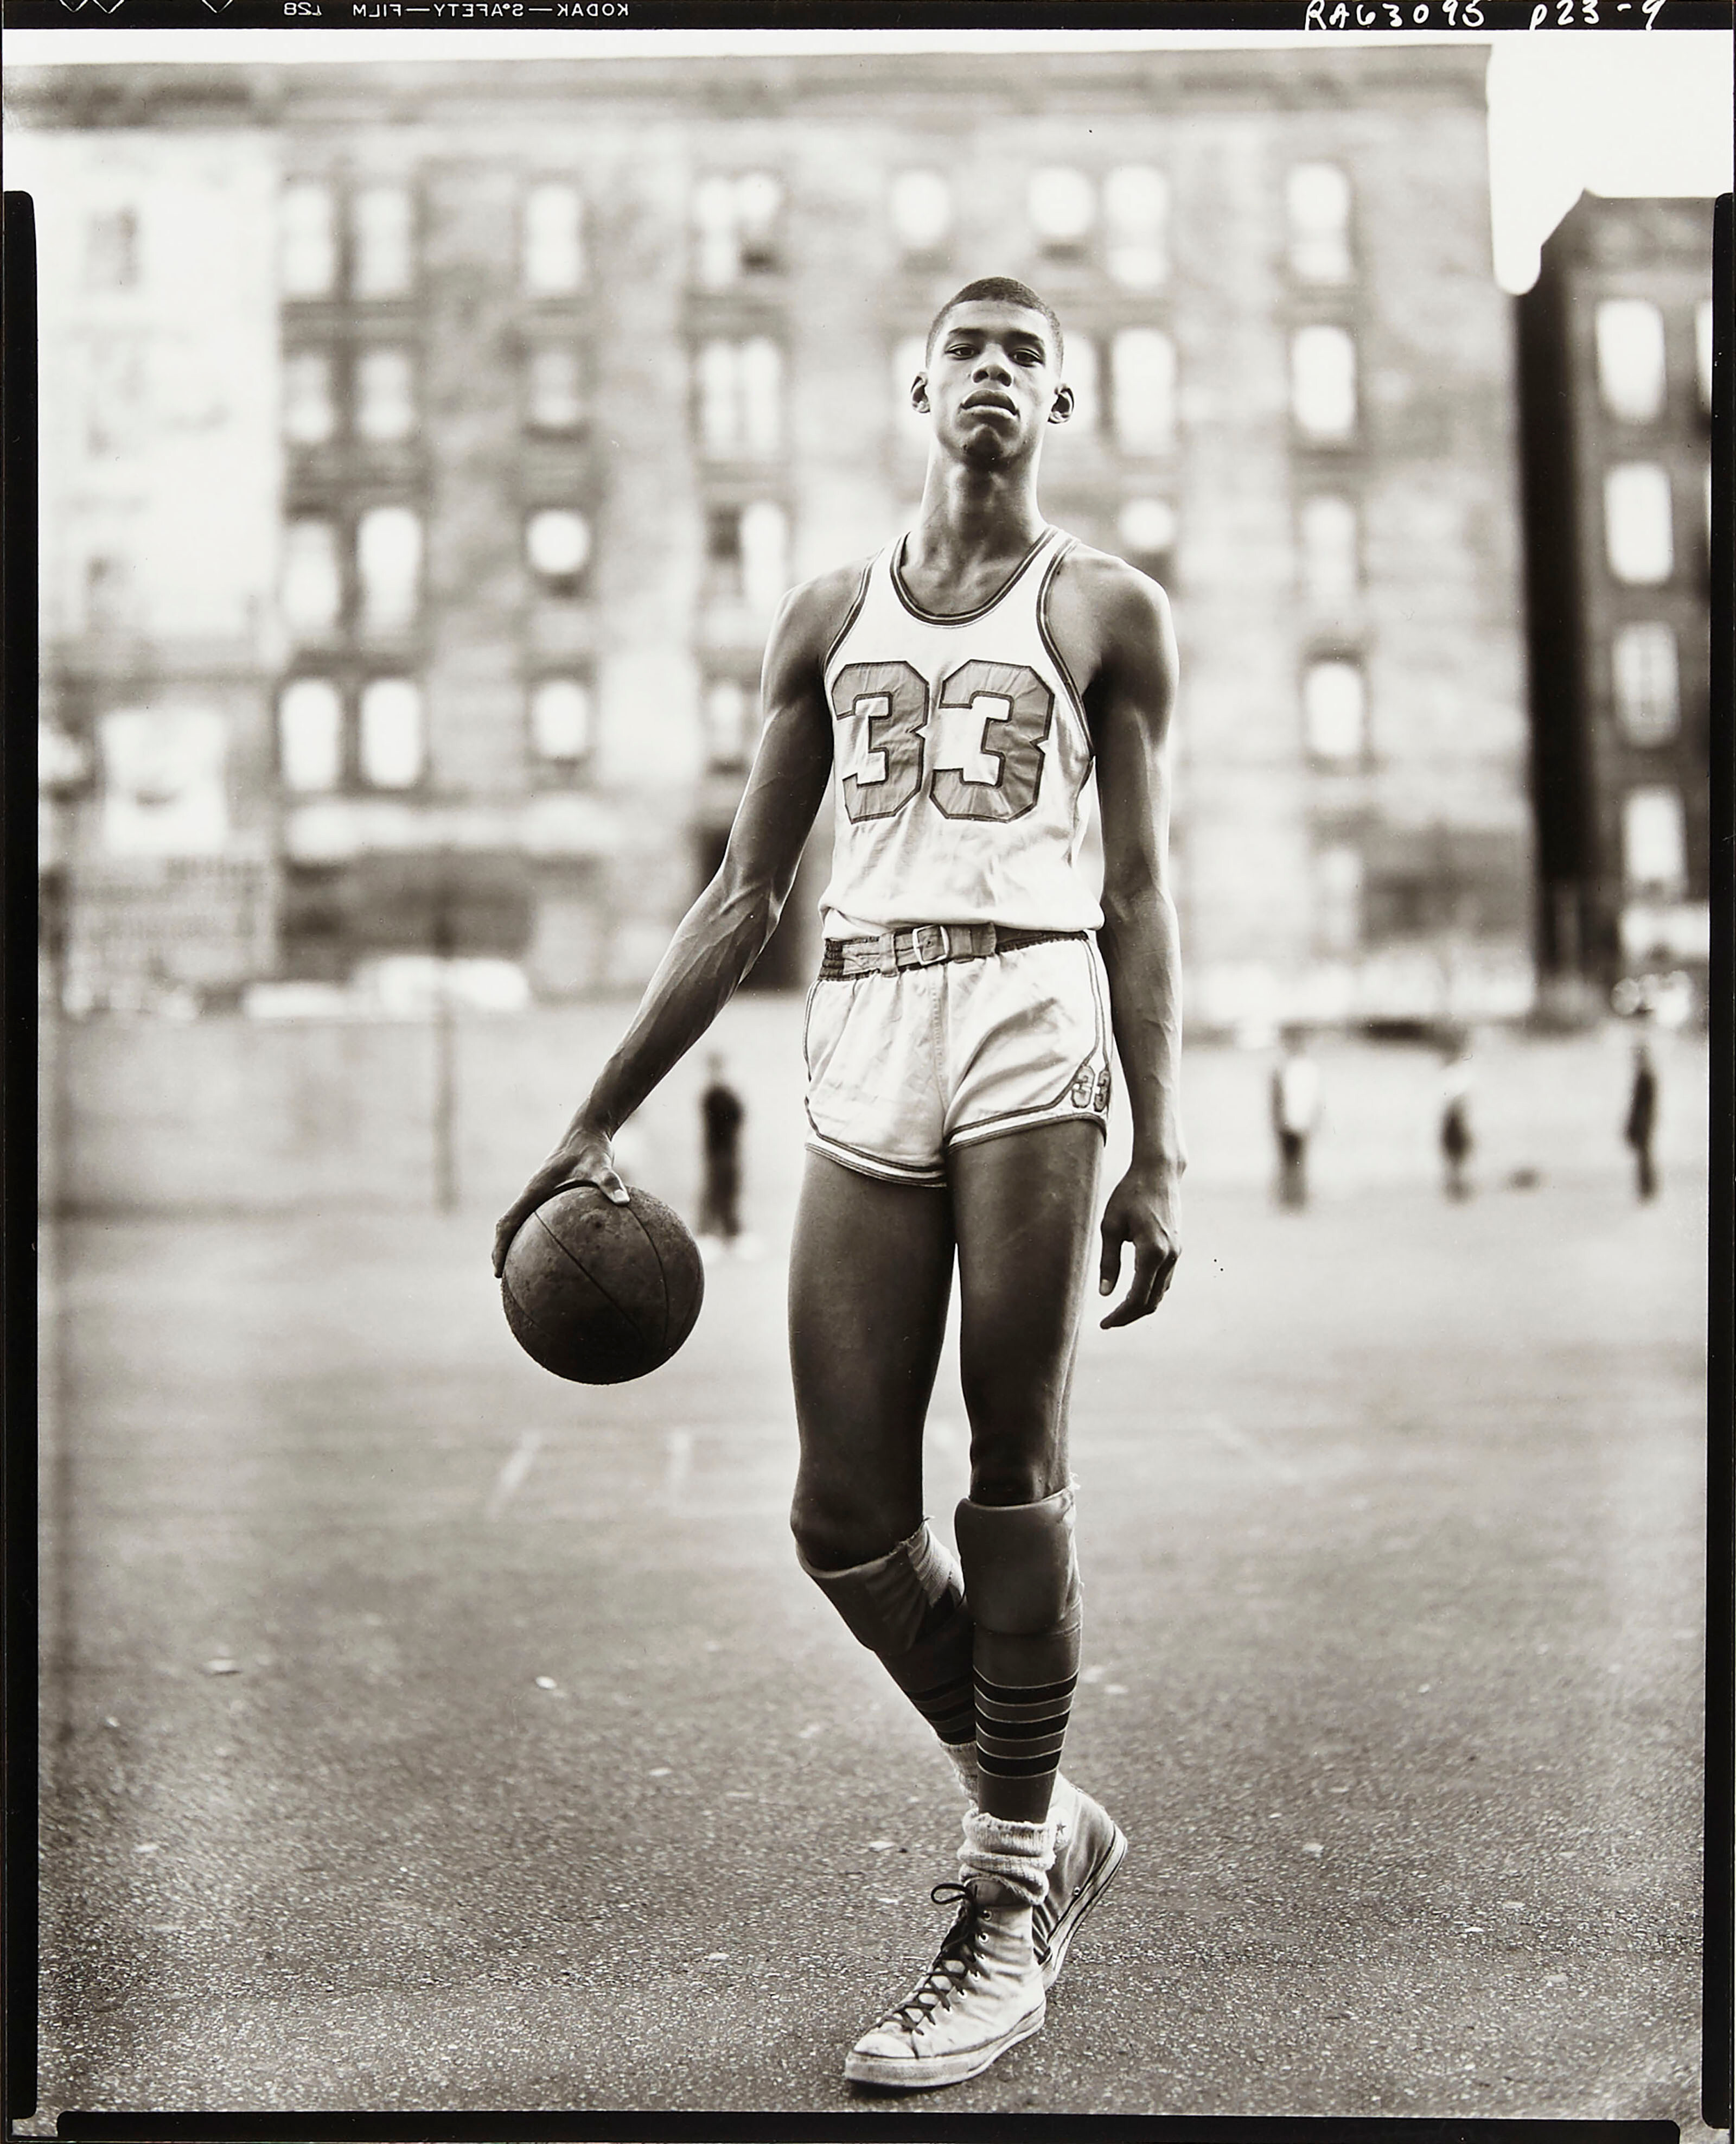 Лью Алсиндор, баскетболист, 61-я улица и Амстердам-авеню, Нью-Йорк, 2 мая 1963 года.  Фотограф Ричард Аведон